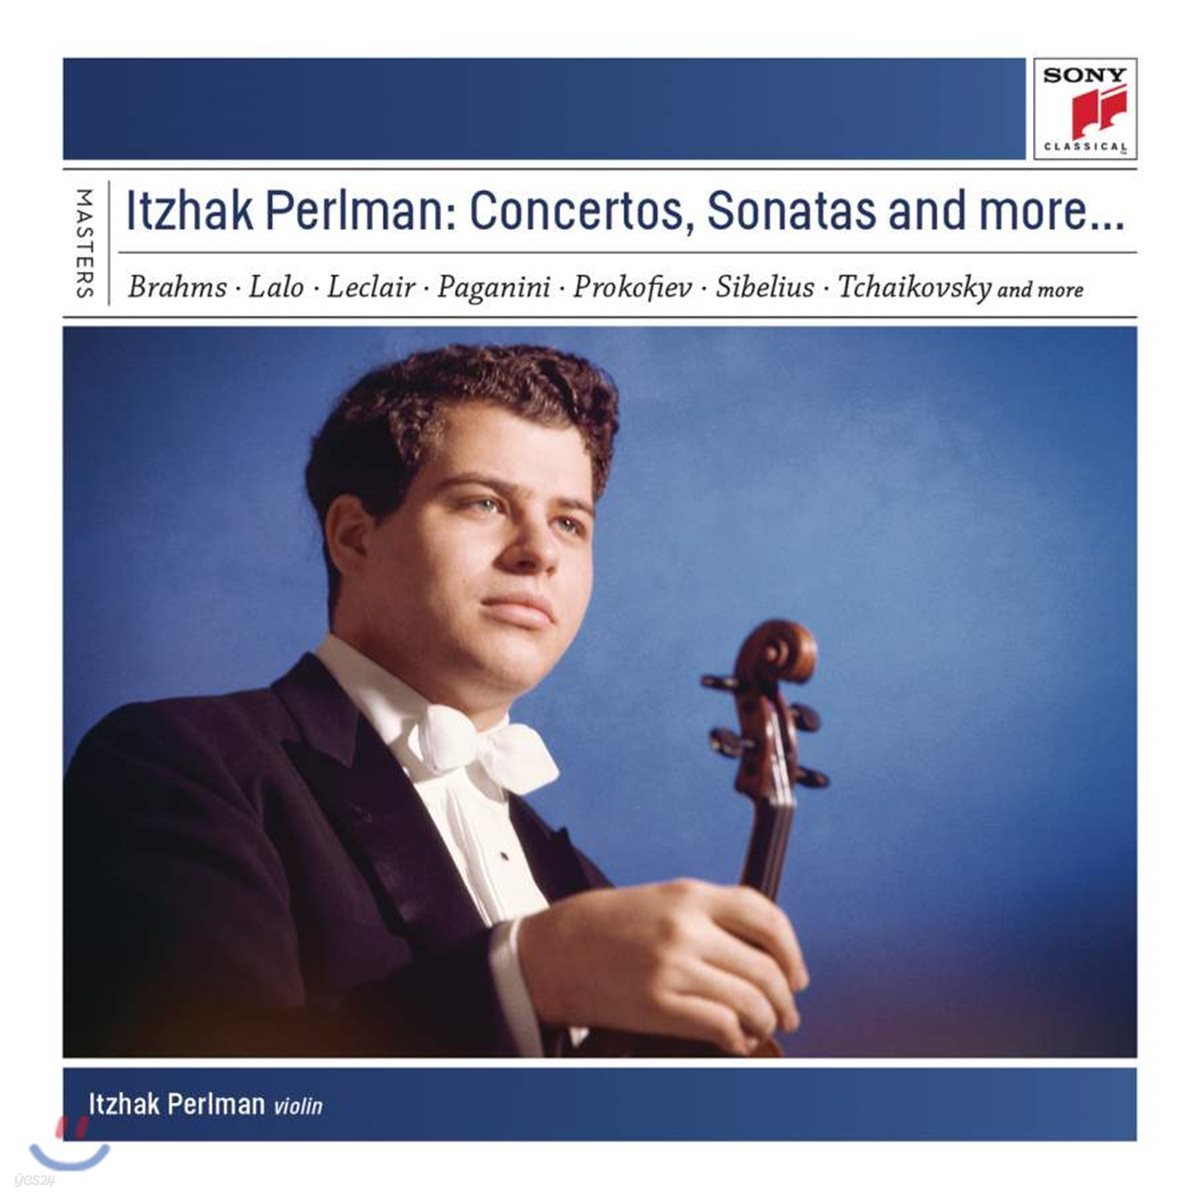 Itzhak Perlman 이차크 펄만이 연주하는 바이올린 협주곡과 소나타 (Concertos, Sonatas and more..)